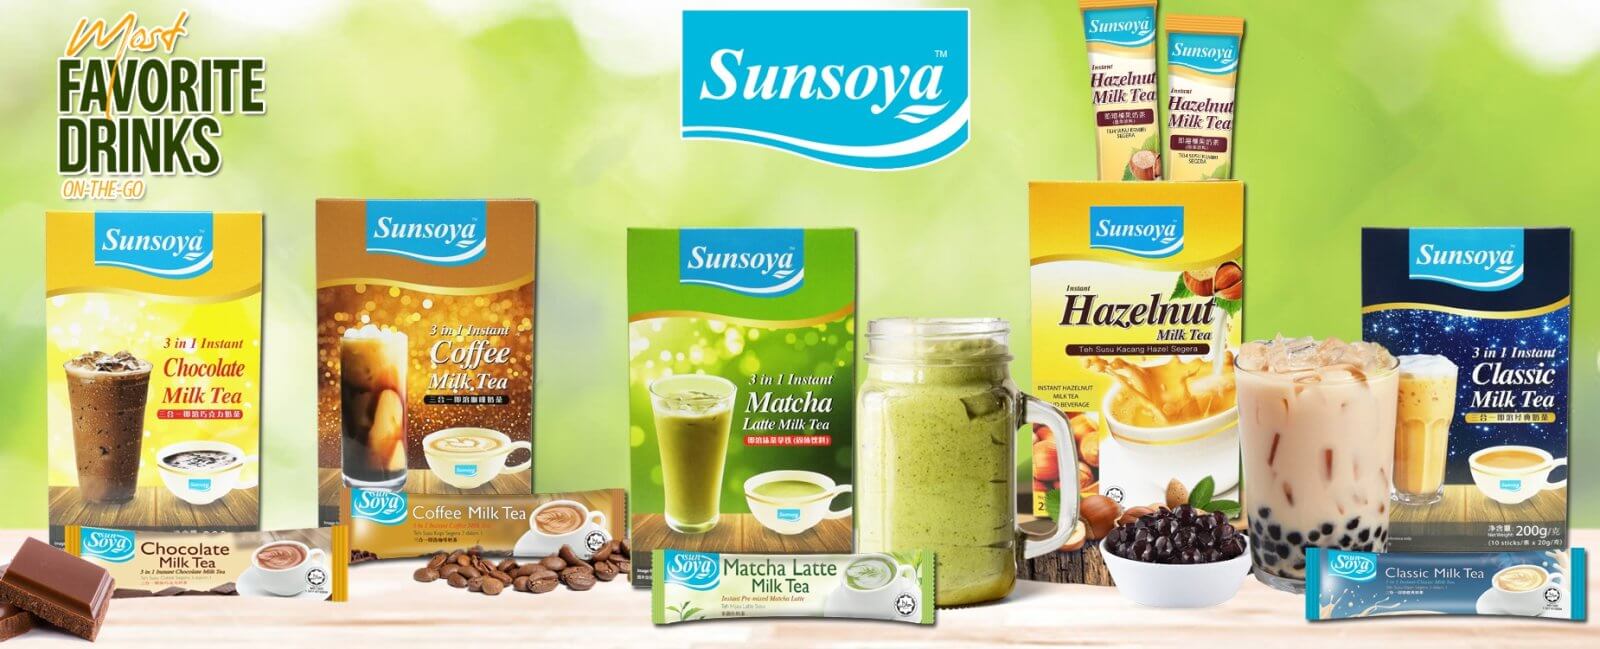 Sunsoya Milk tea Background